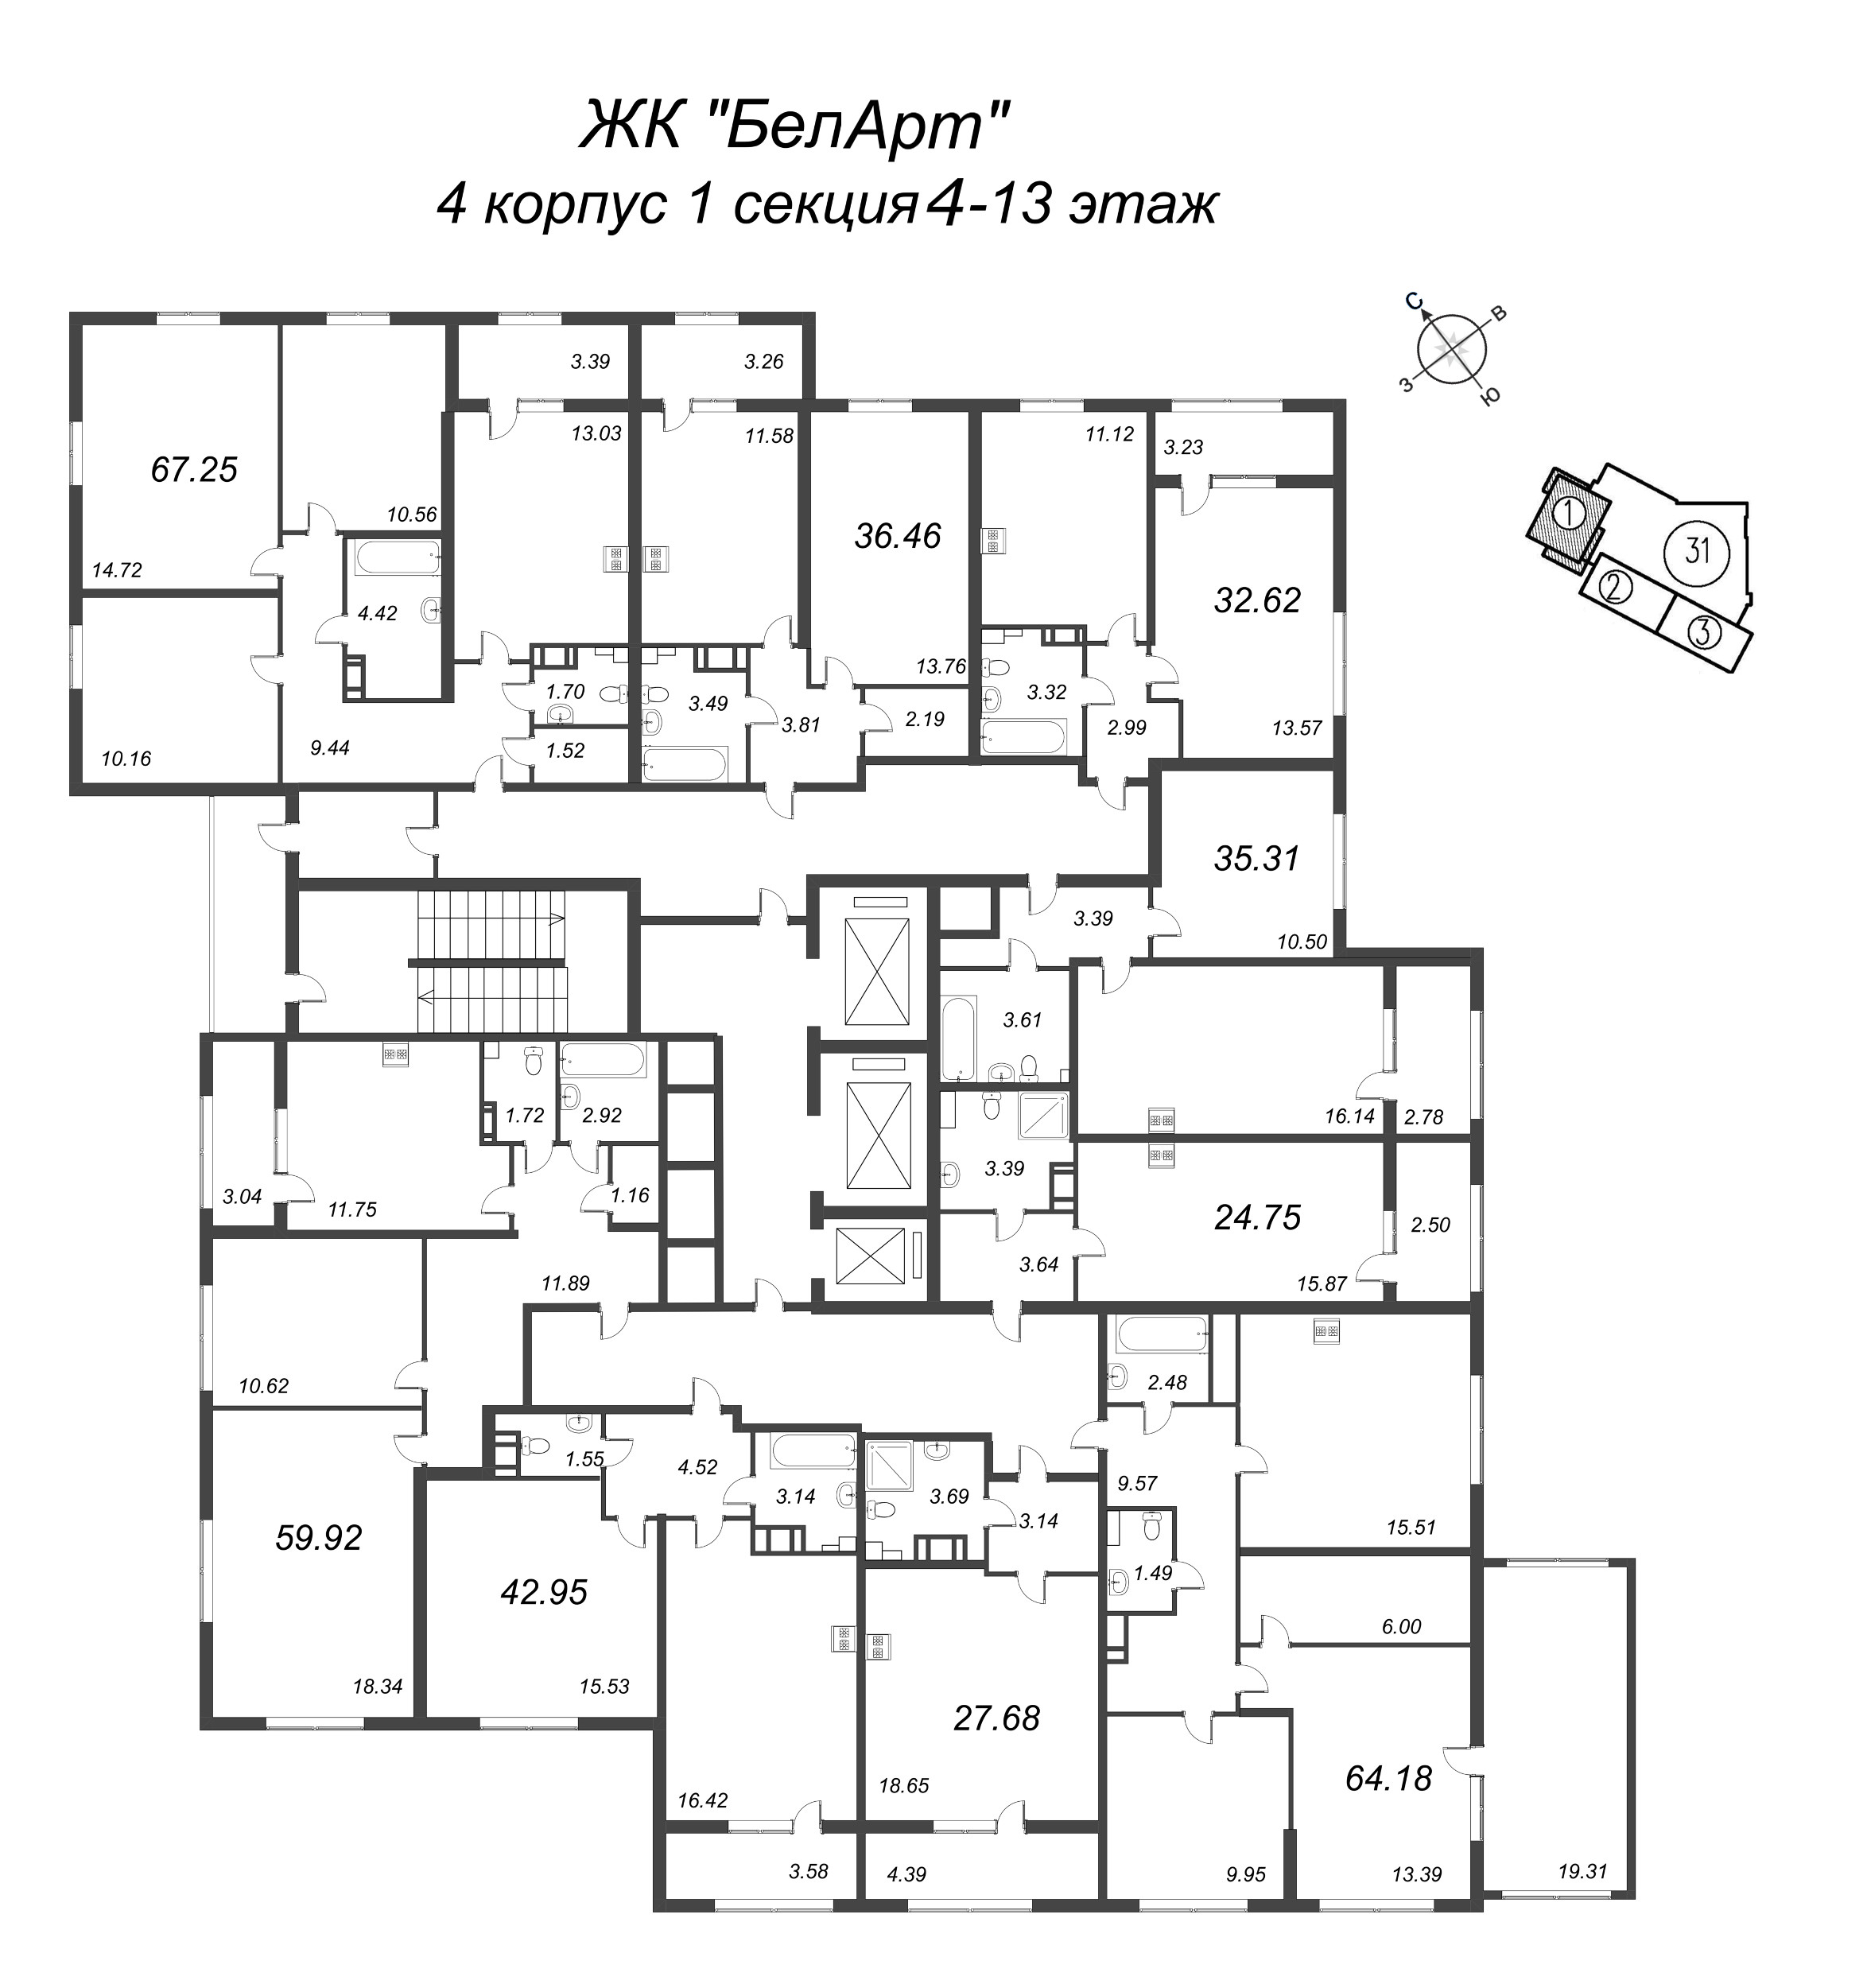 2-комнатная (Евро) квартира, 35.31 м² - планировка этажа